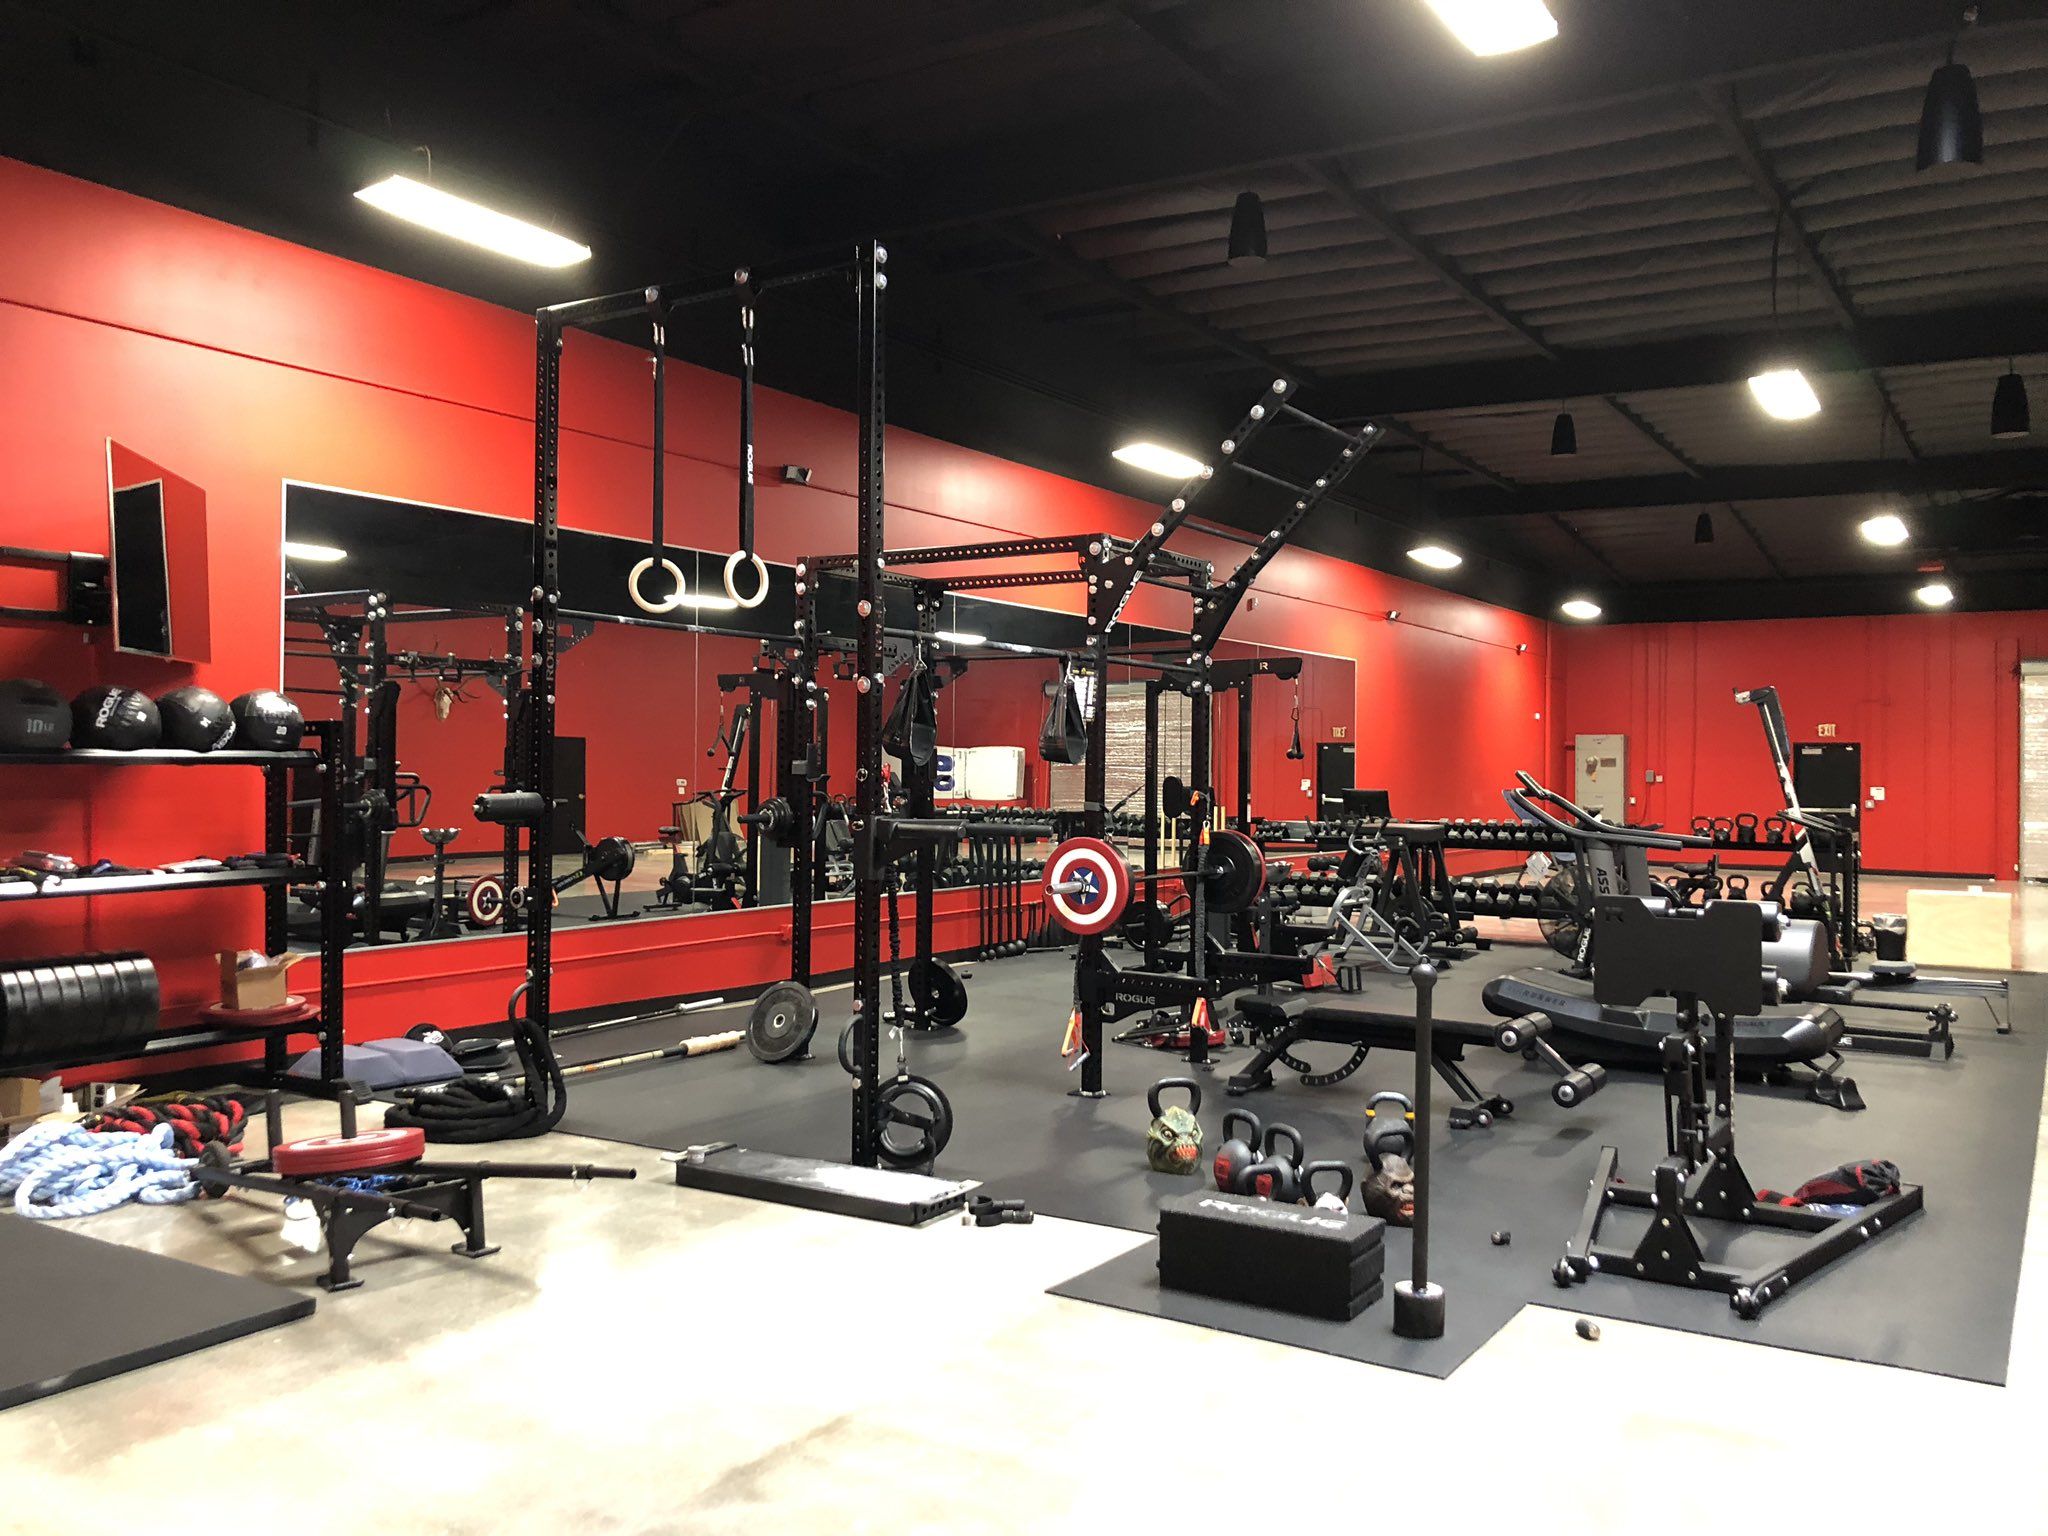 Fitness Studio with Gym Equipment